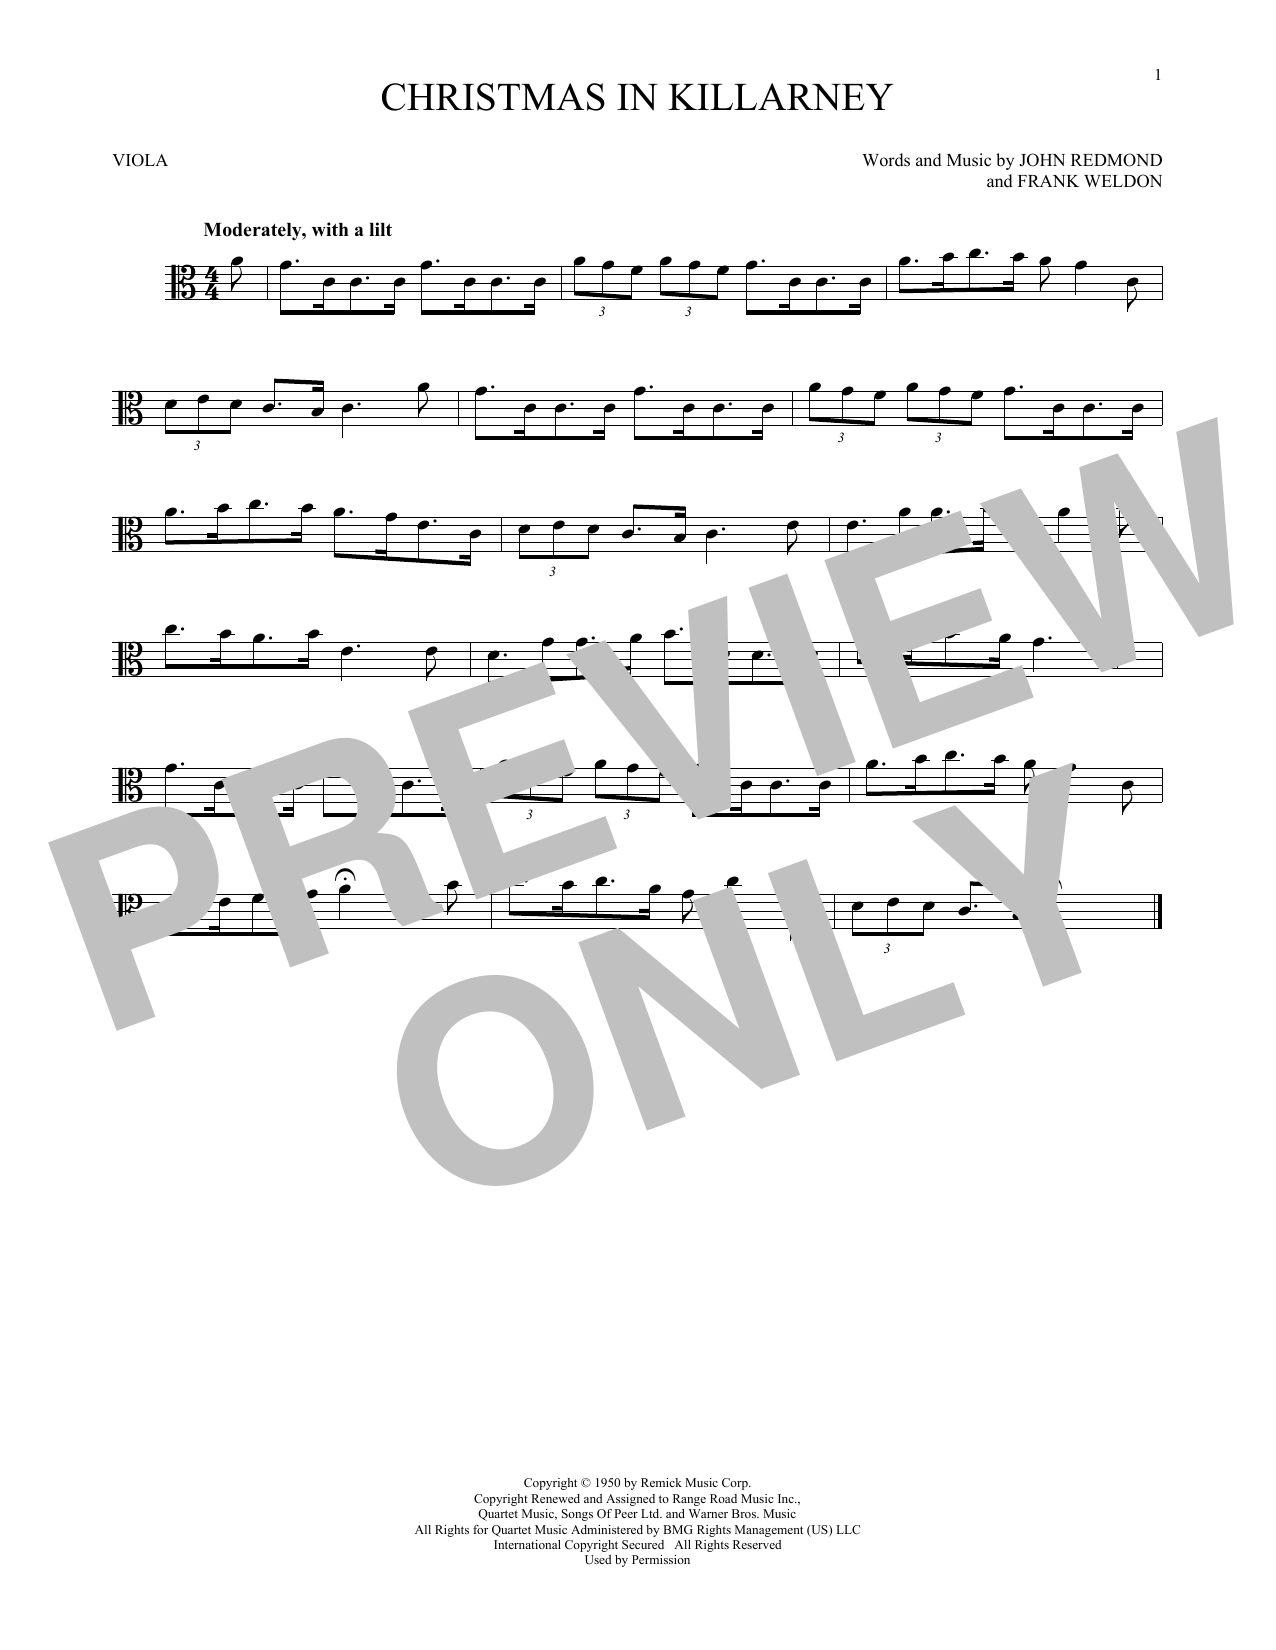 John Redmond & Frank Weldon Christmas In Killarney Sheet Music Notes & Chords for Violin Solo - Download or Print PDF